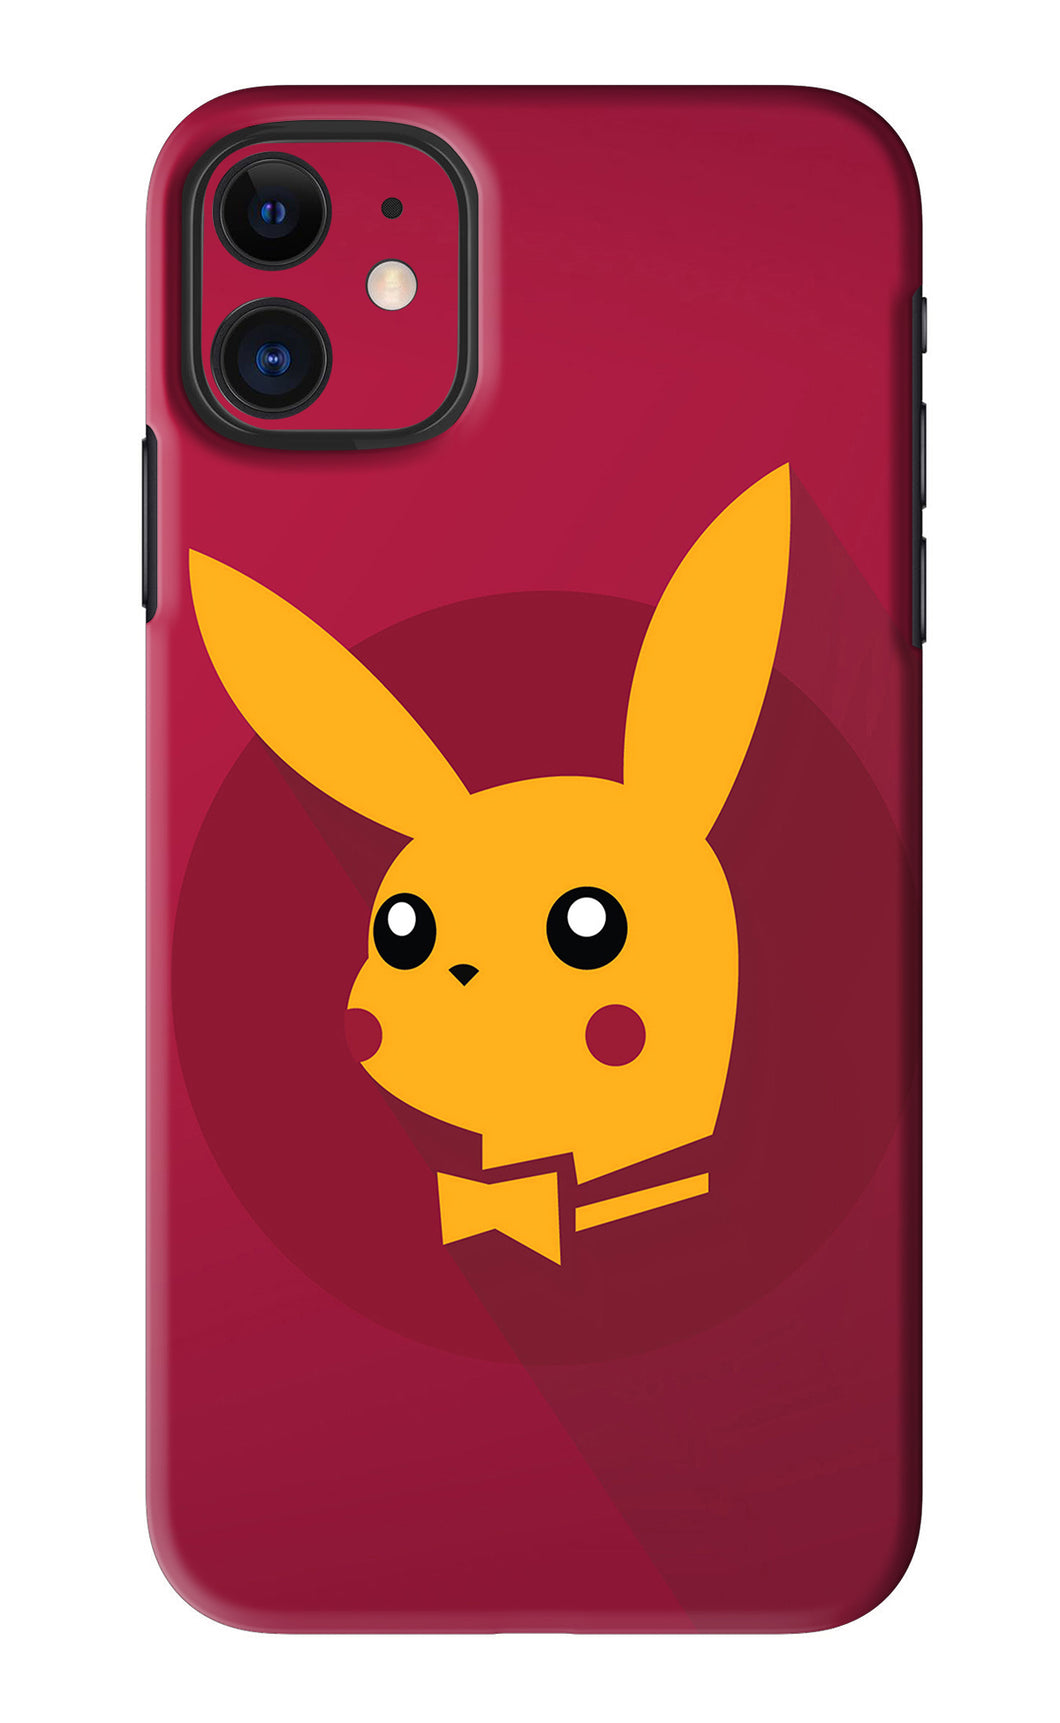 Pikachu iPhone 11 Back Skin Wrap